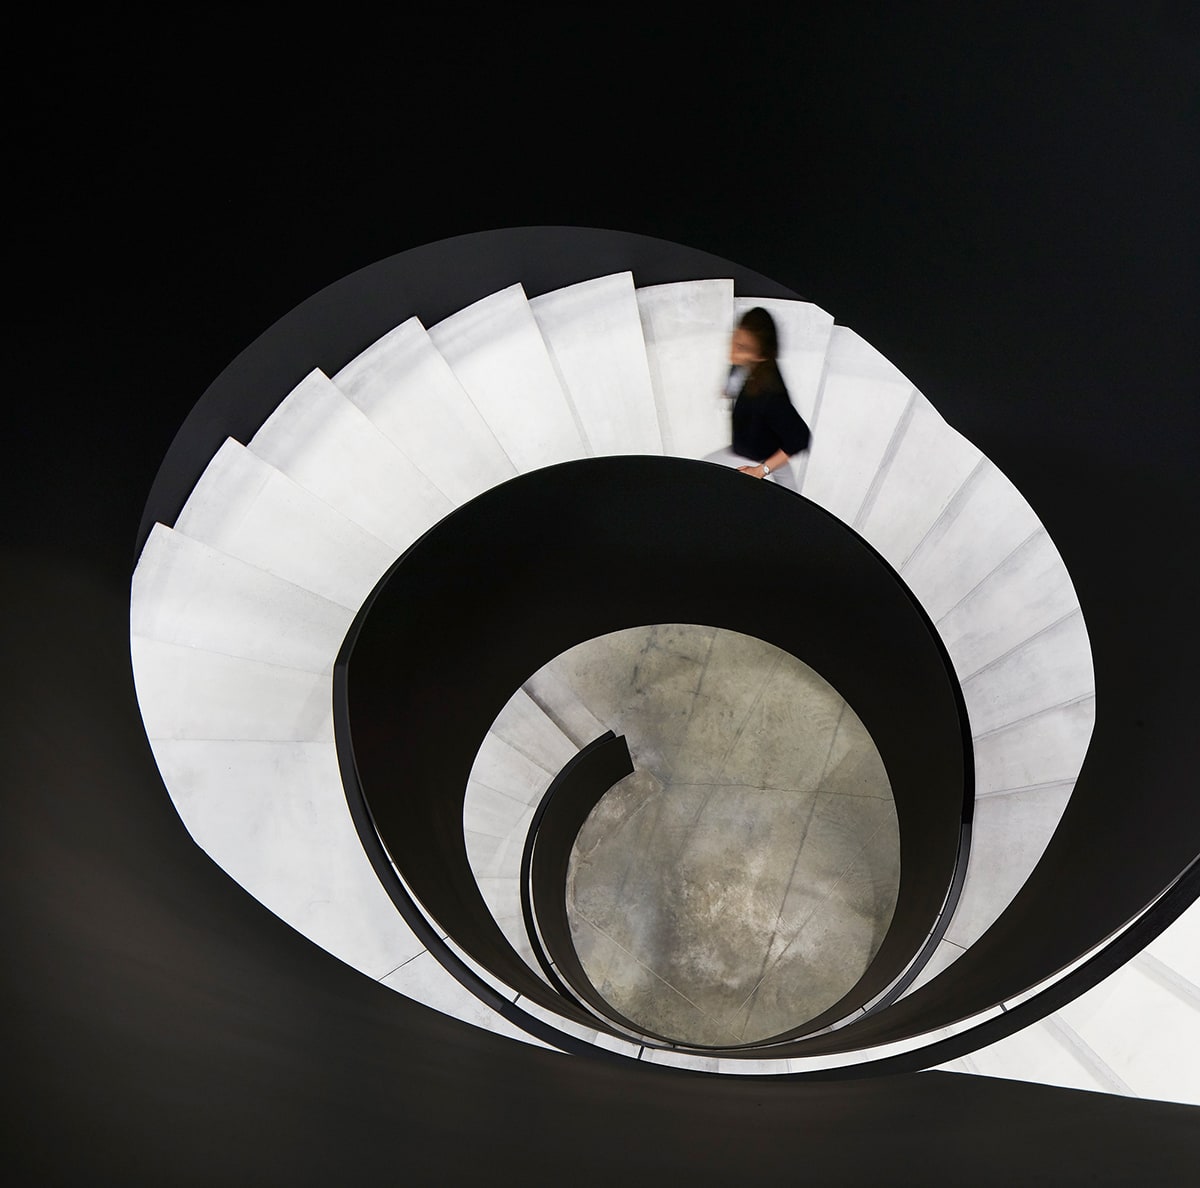 MO Modern Art Museum, Vilnius, Lithuania / Daniel Libeskind